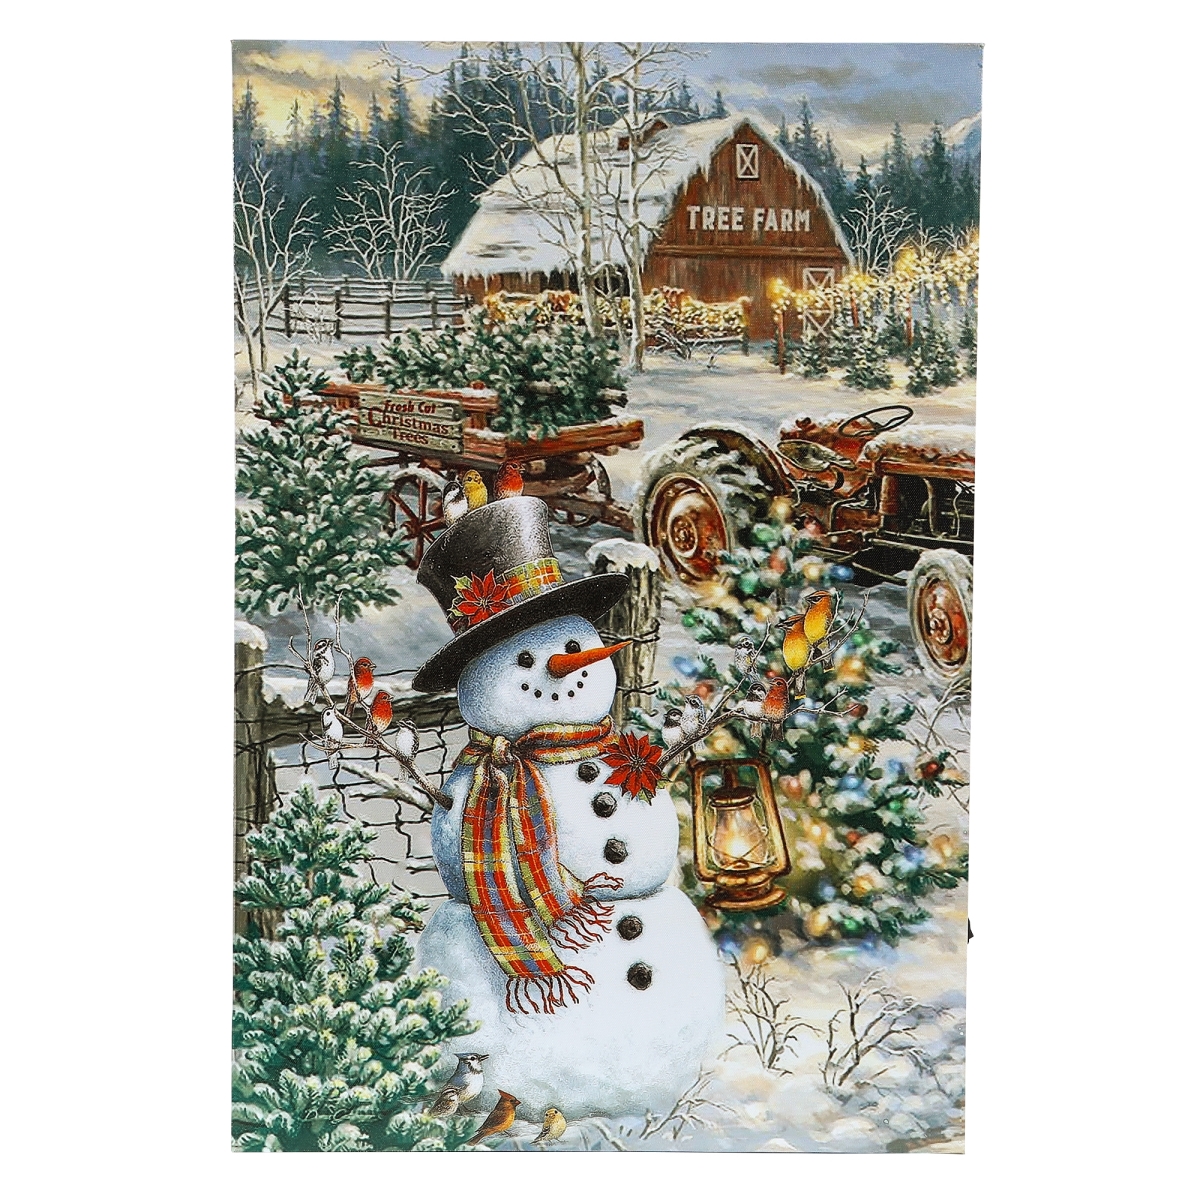 Wha656 Winter Wonderland Snowman Christmas Tree Farm Canvas Print Wall Art With Led Lights